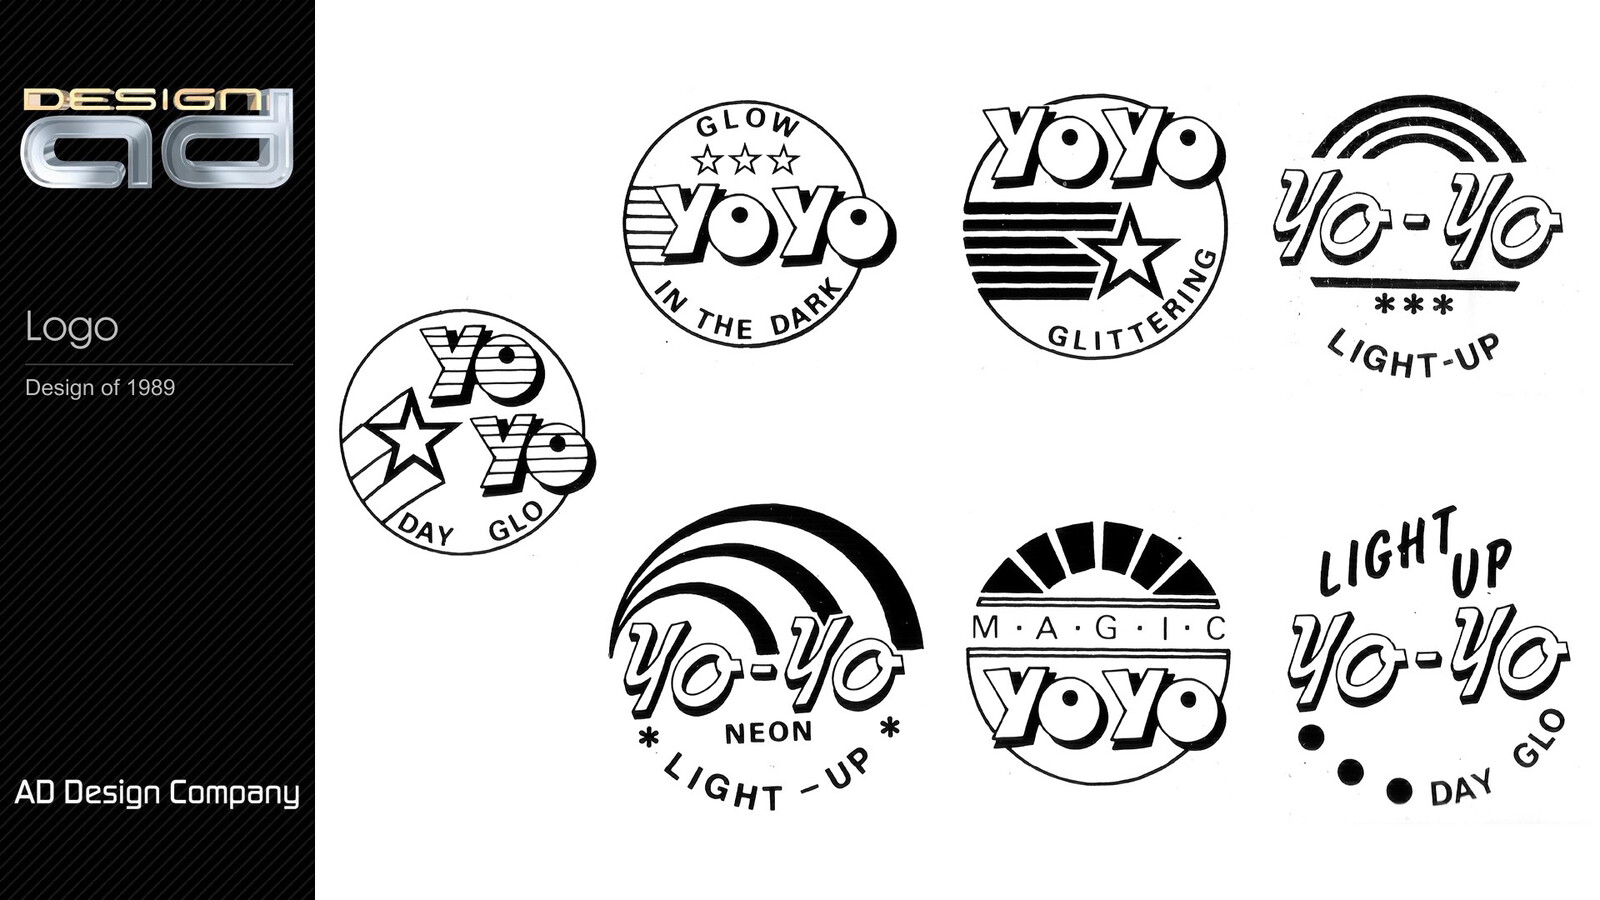 💎 Logo | Design by Leung Chung Kwan on 1989 💎
Client︰Billco Industrial Co., Ltd.